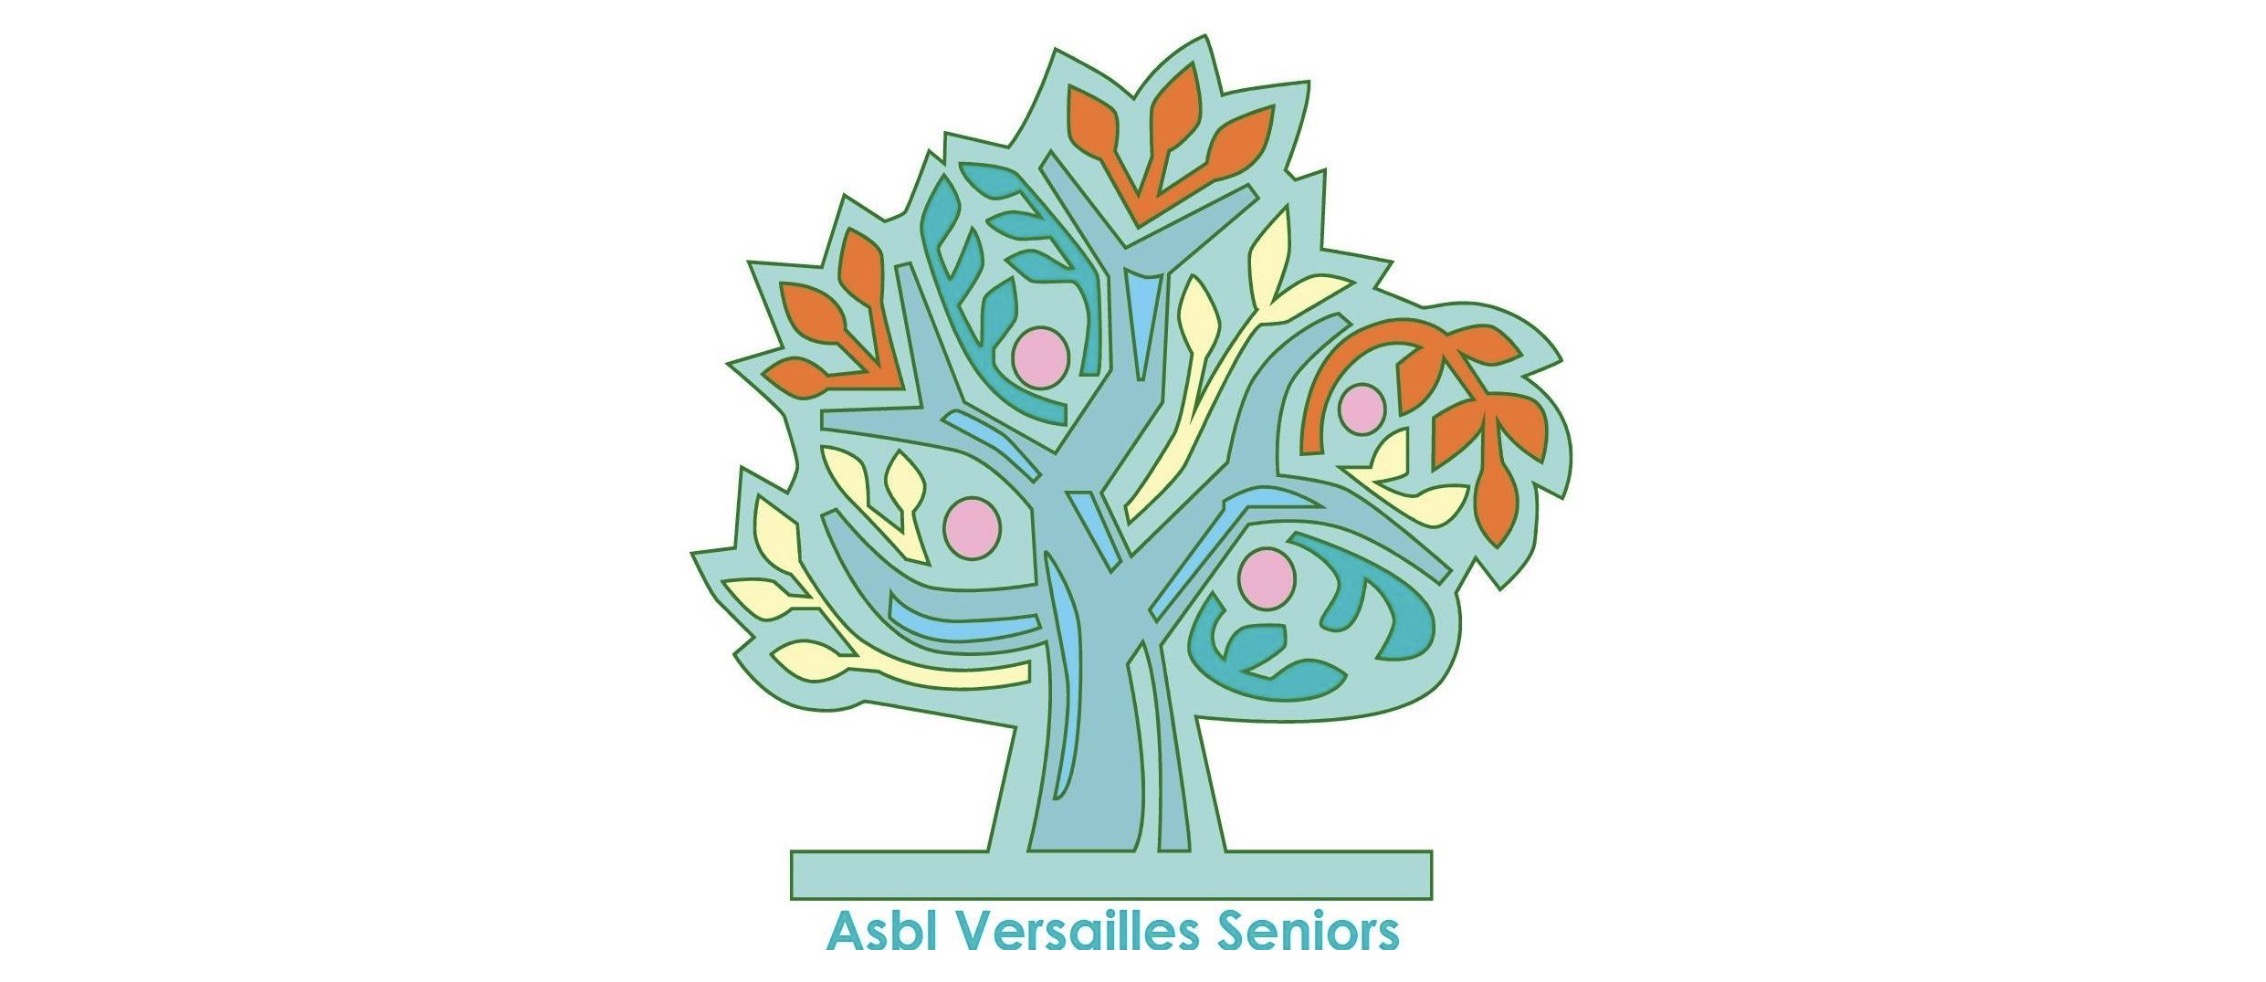 Programme de Versailles Seniors